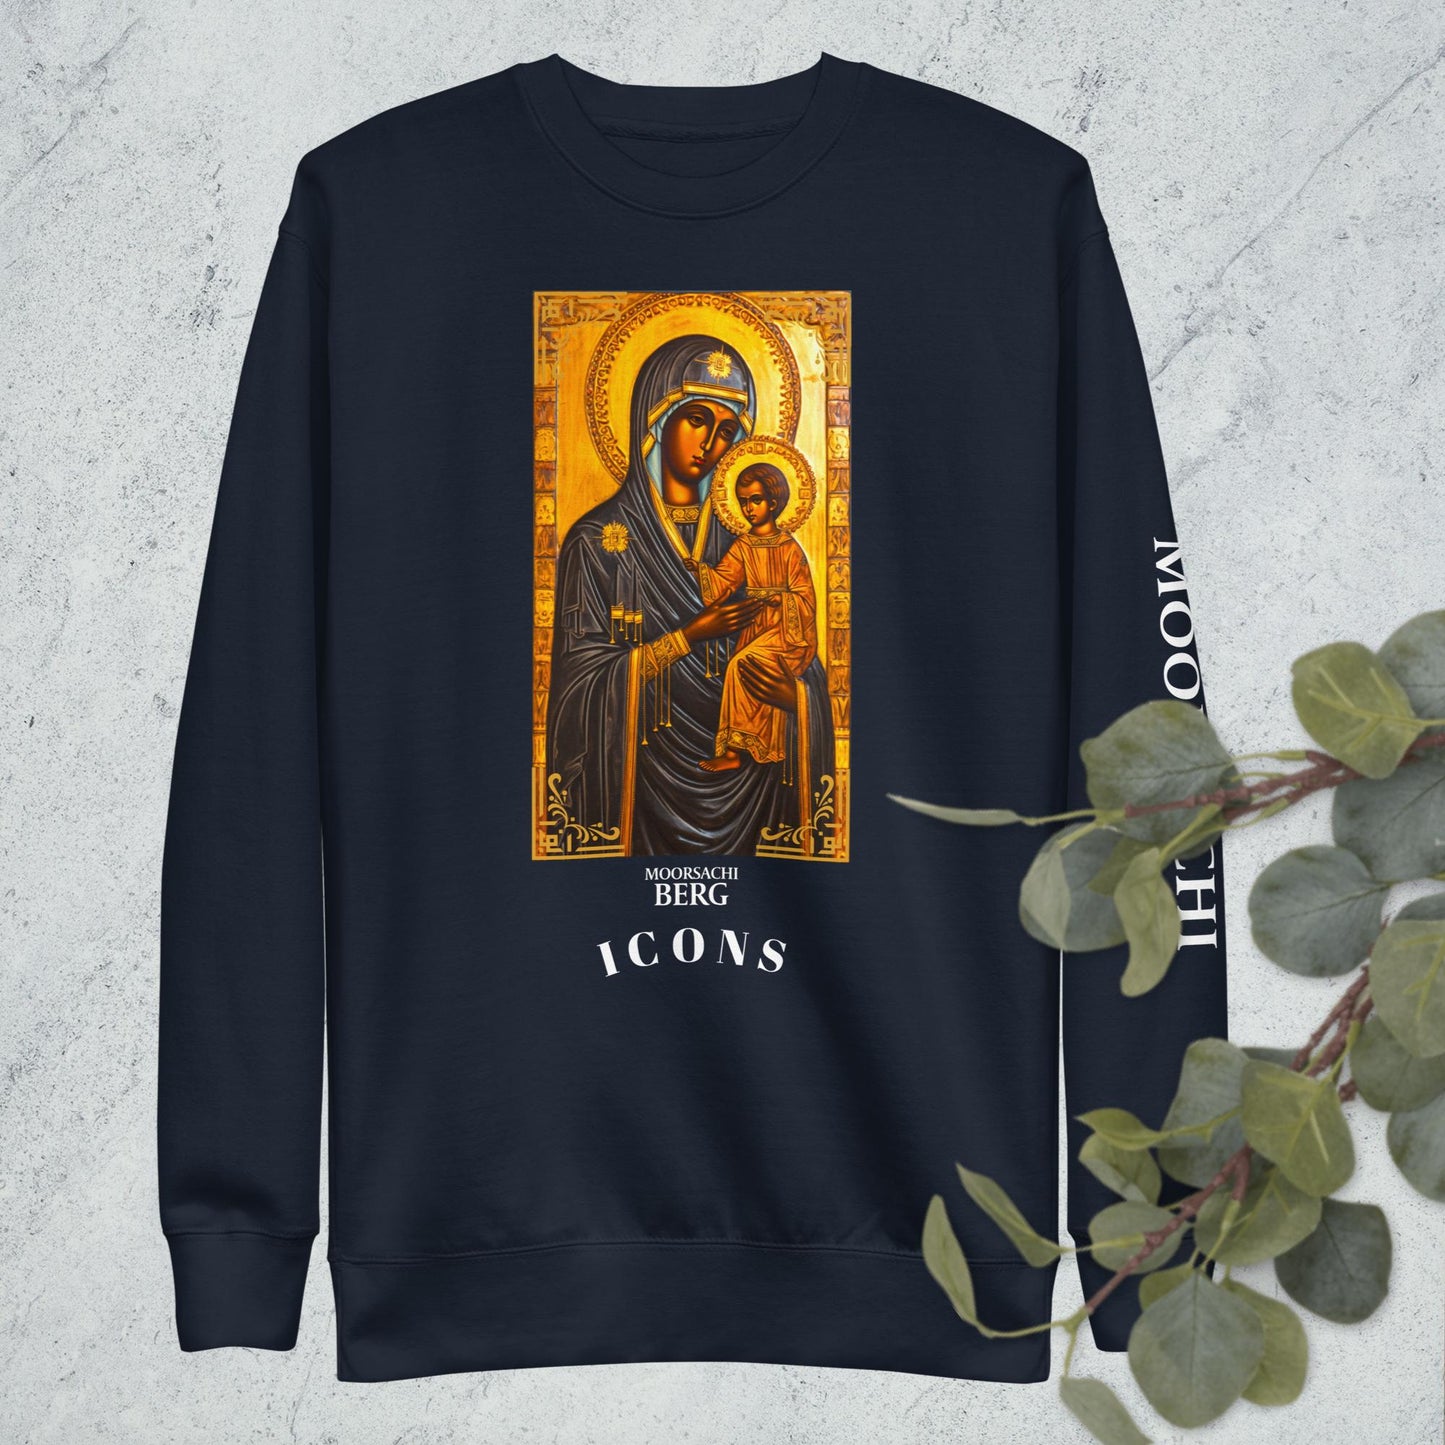 MOORSACHI BERG ICONS: MA&SON - Premium Sweatshirt